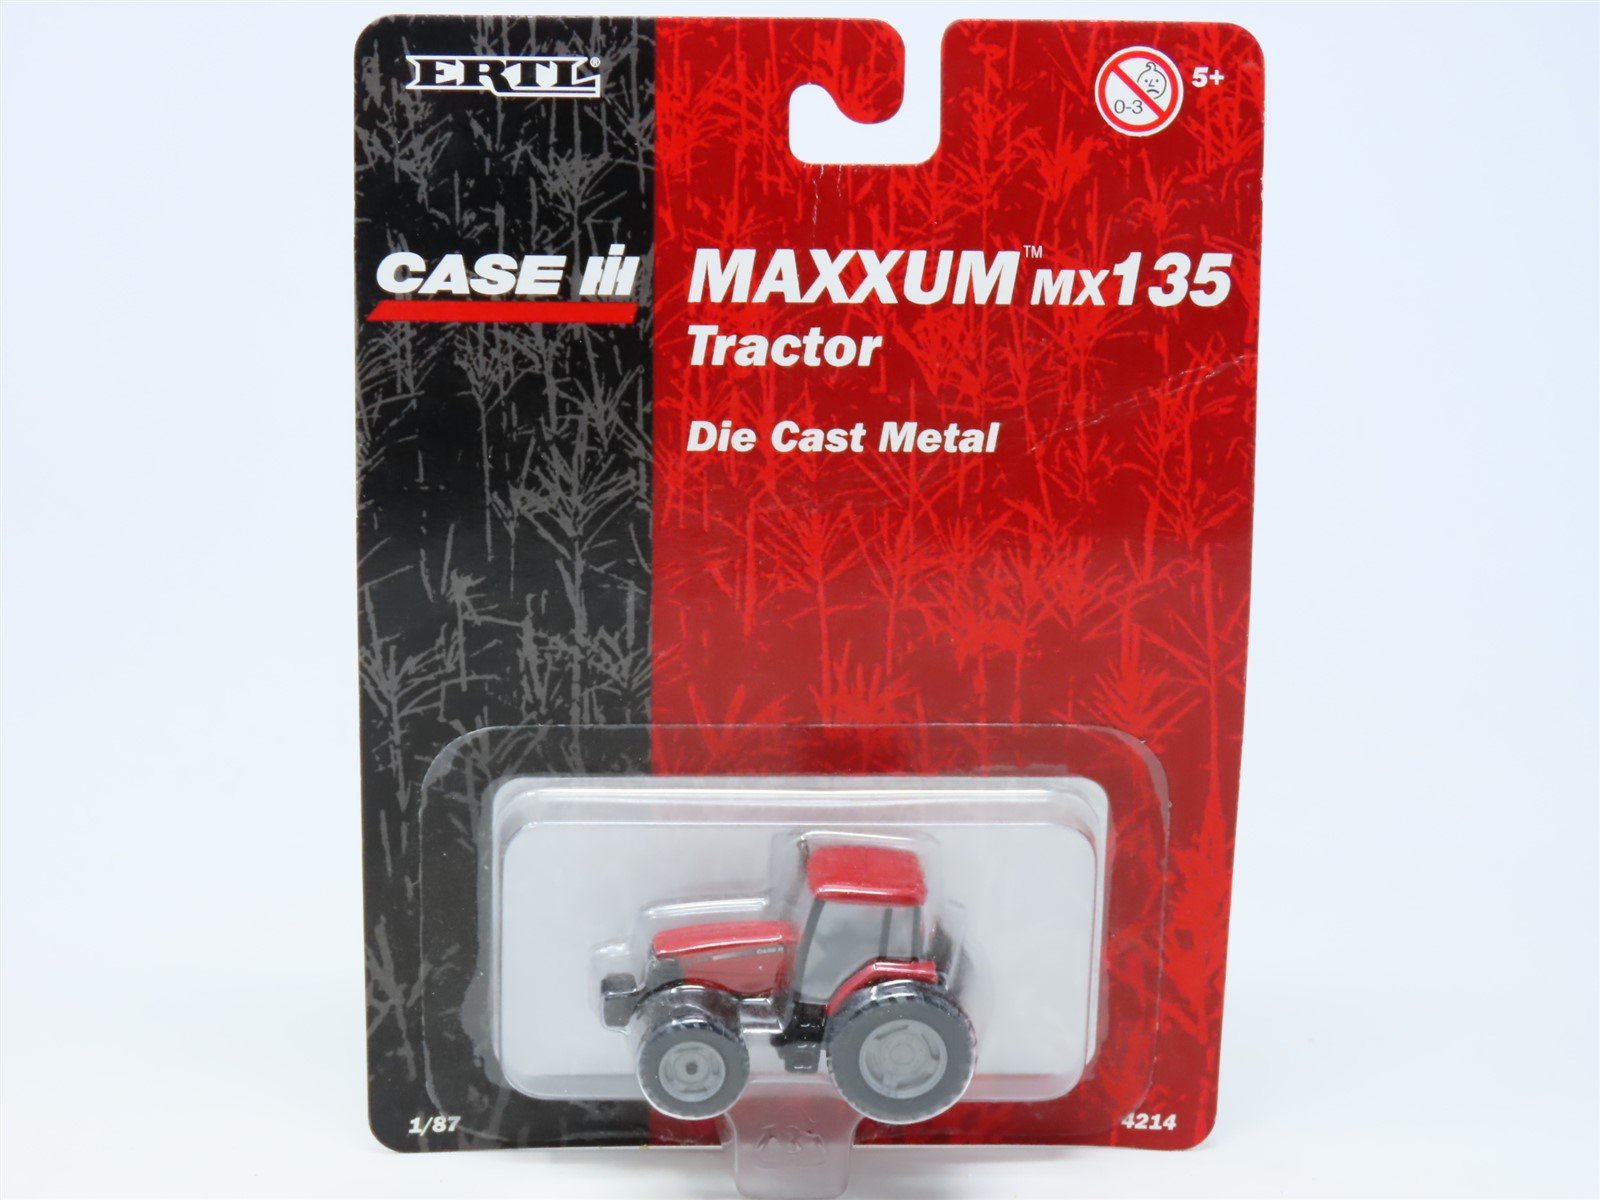 HO 1/87 Scale Ertl #4214 Die Cast Metal Case IH Maxxum MX135 Tractor